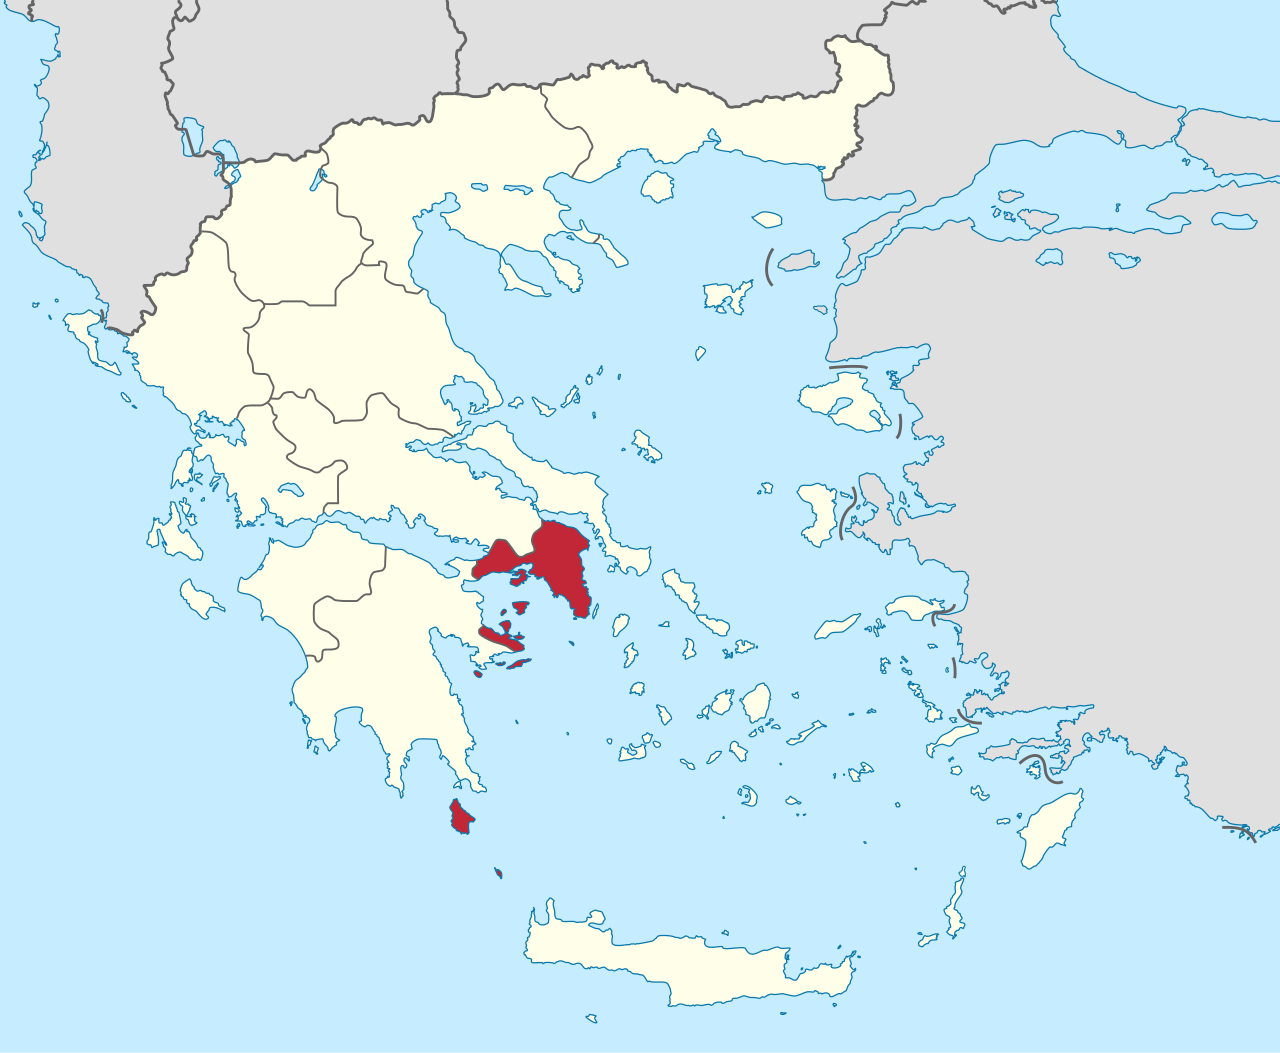 Palace Tt Urbex location or around the region Attica, Greece